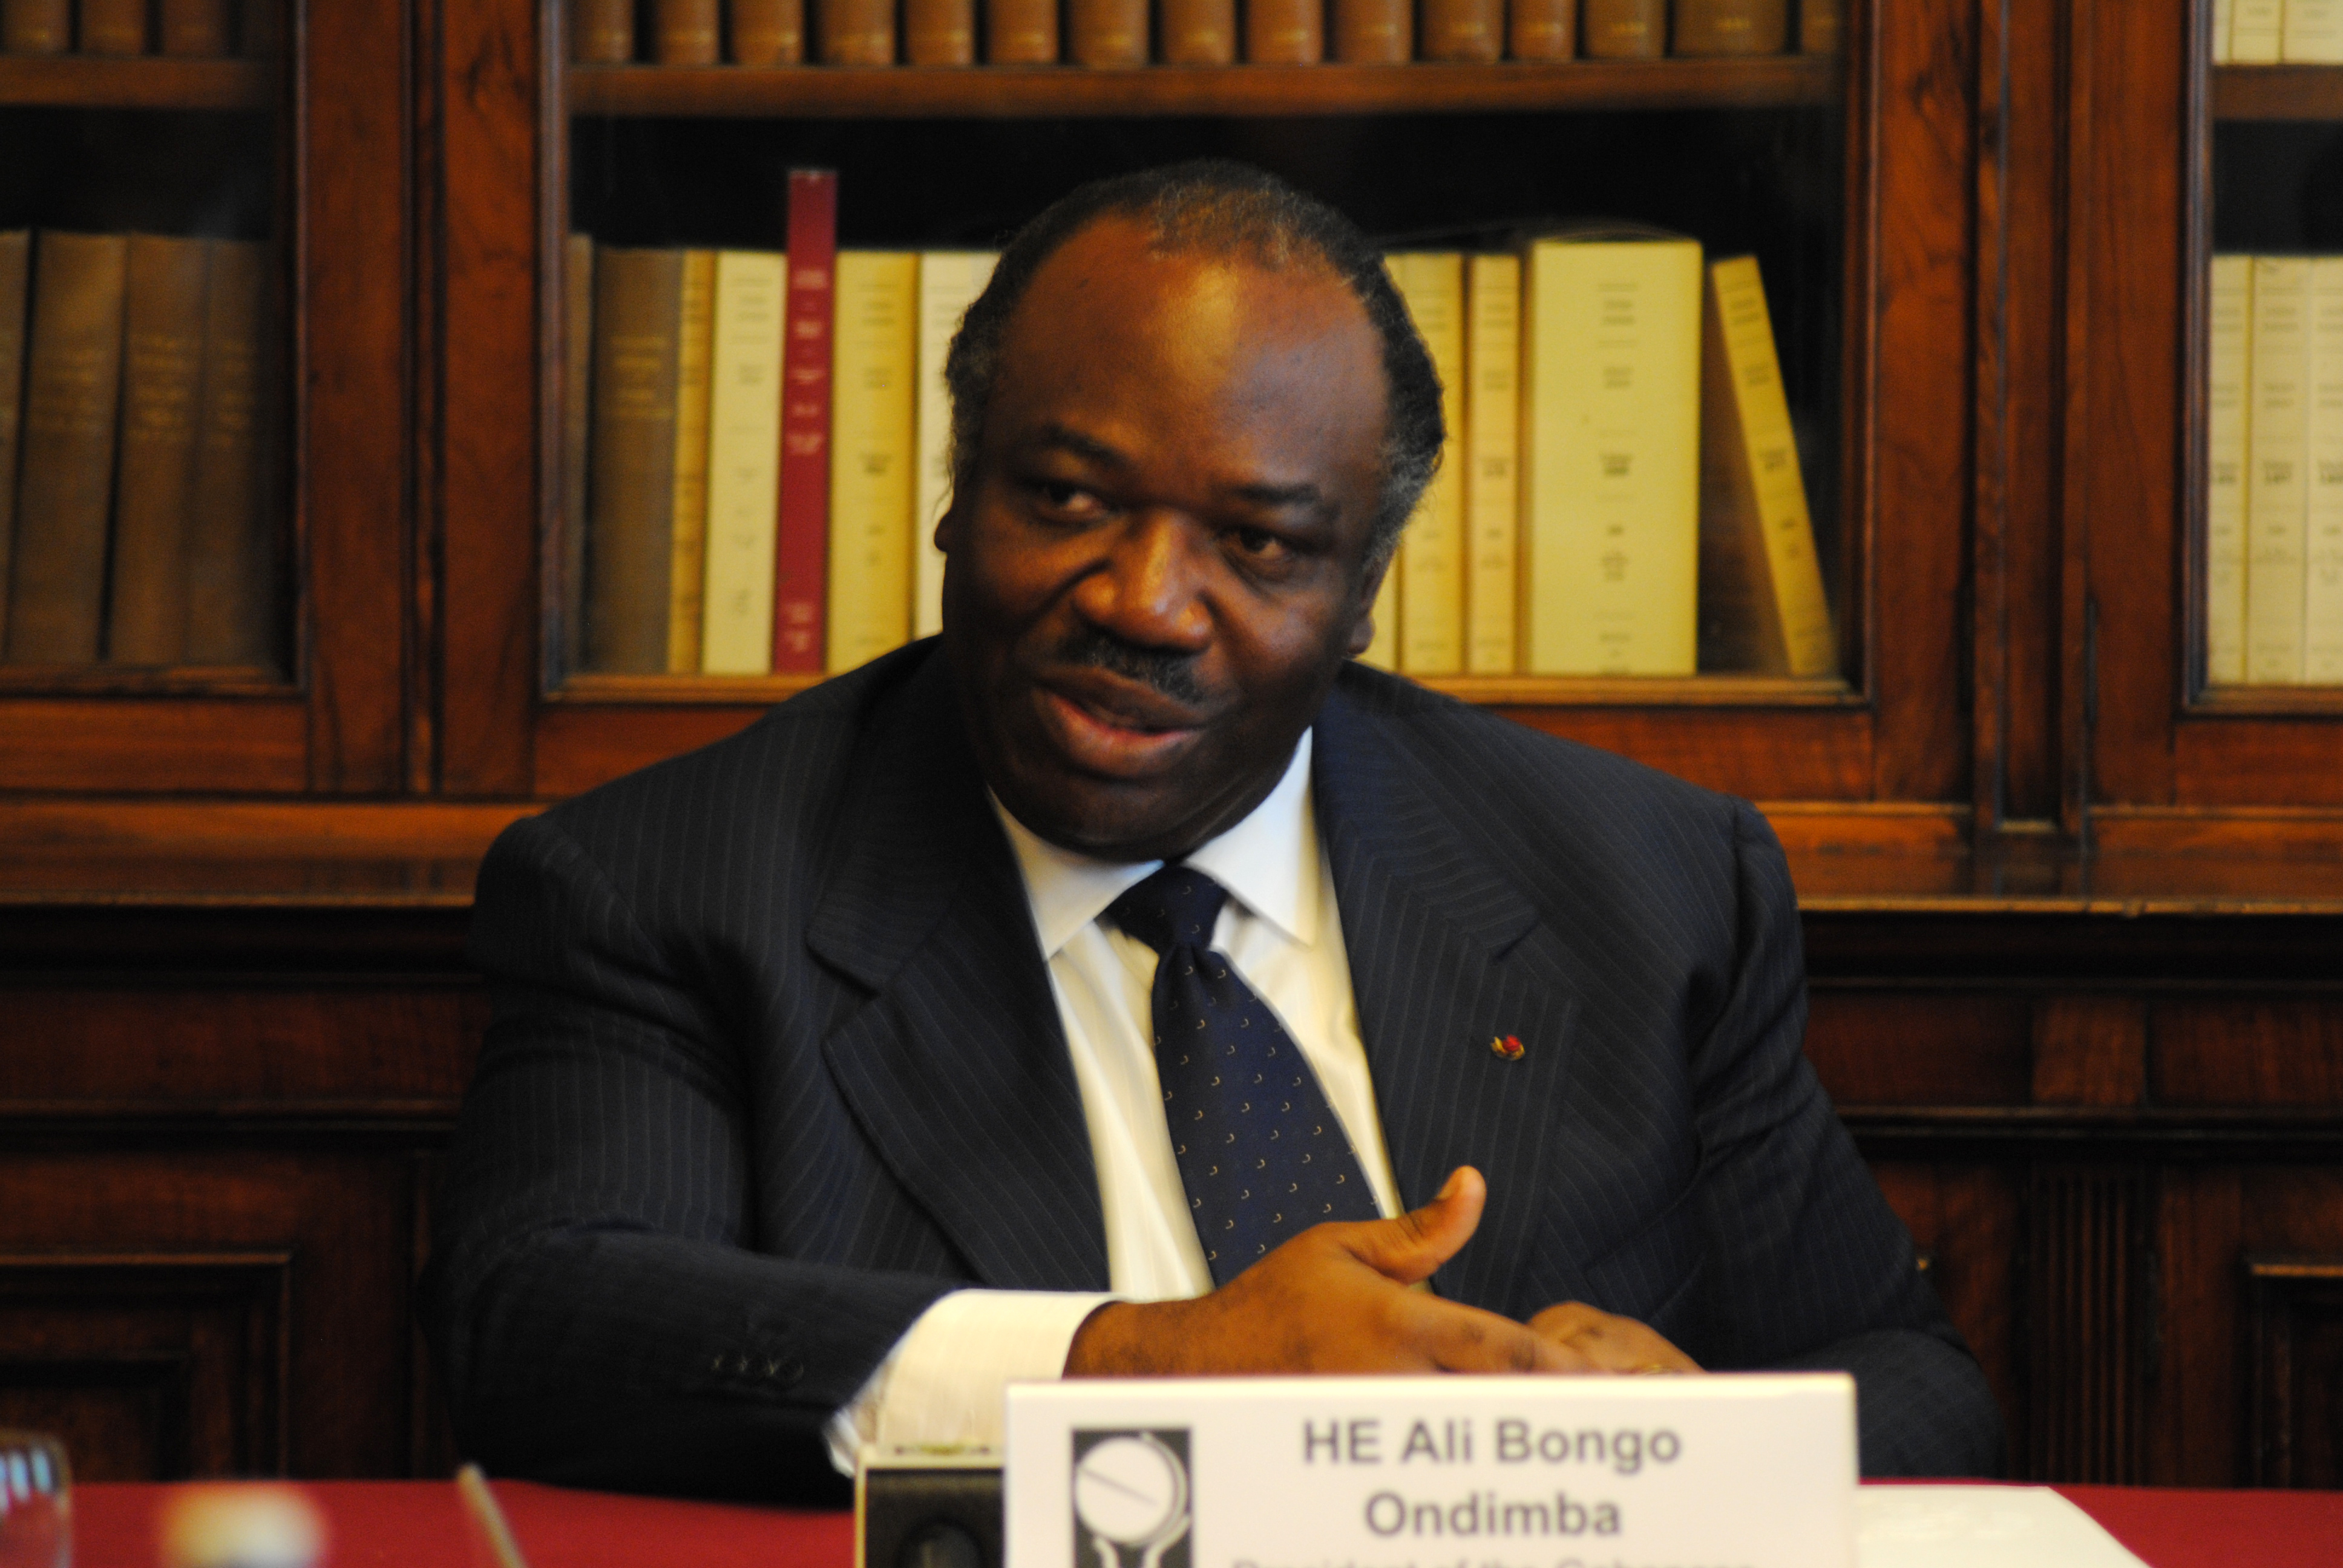 President Ali Bongo (photo credit: Chatham House/flickr)